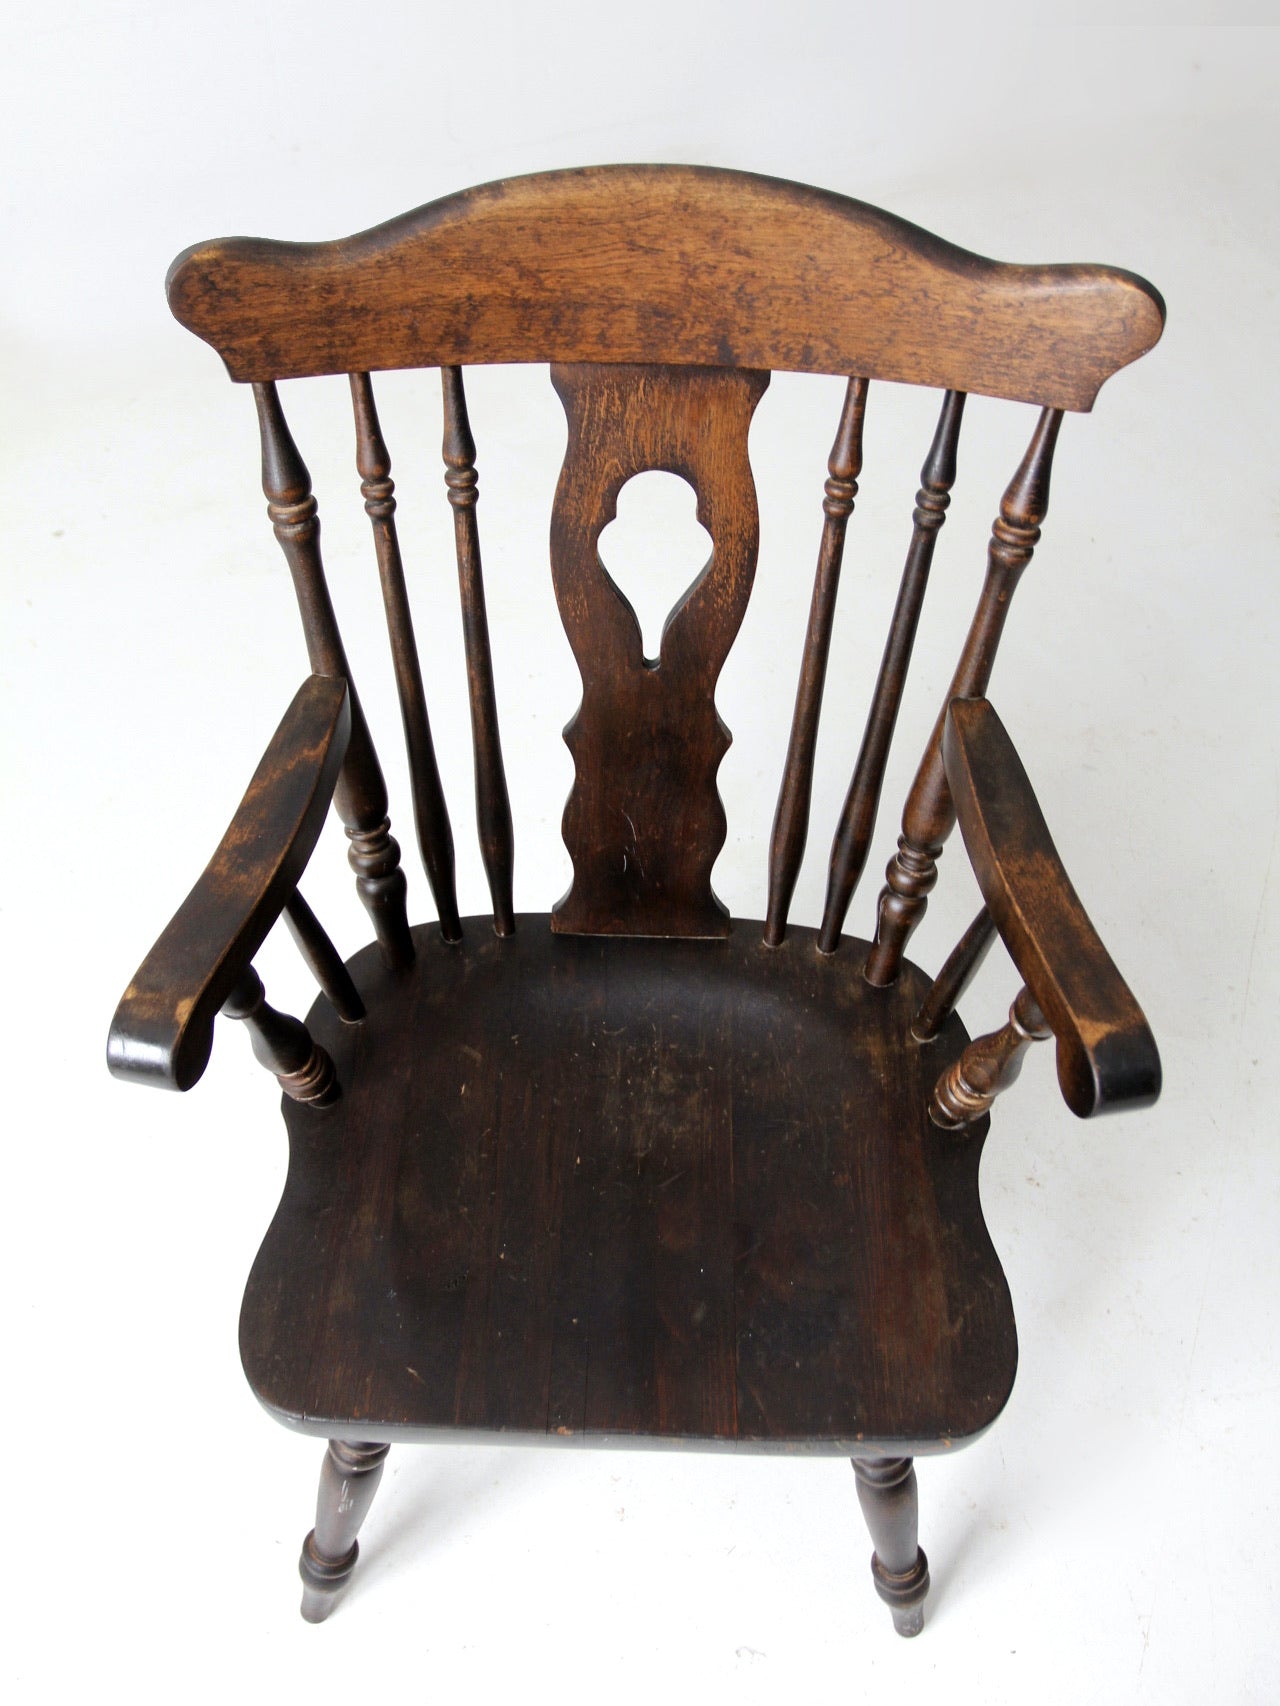 mid-century Nichols & Stone Windsor arm chair